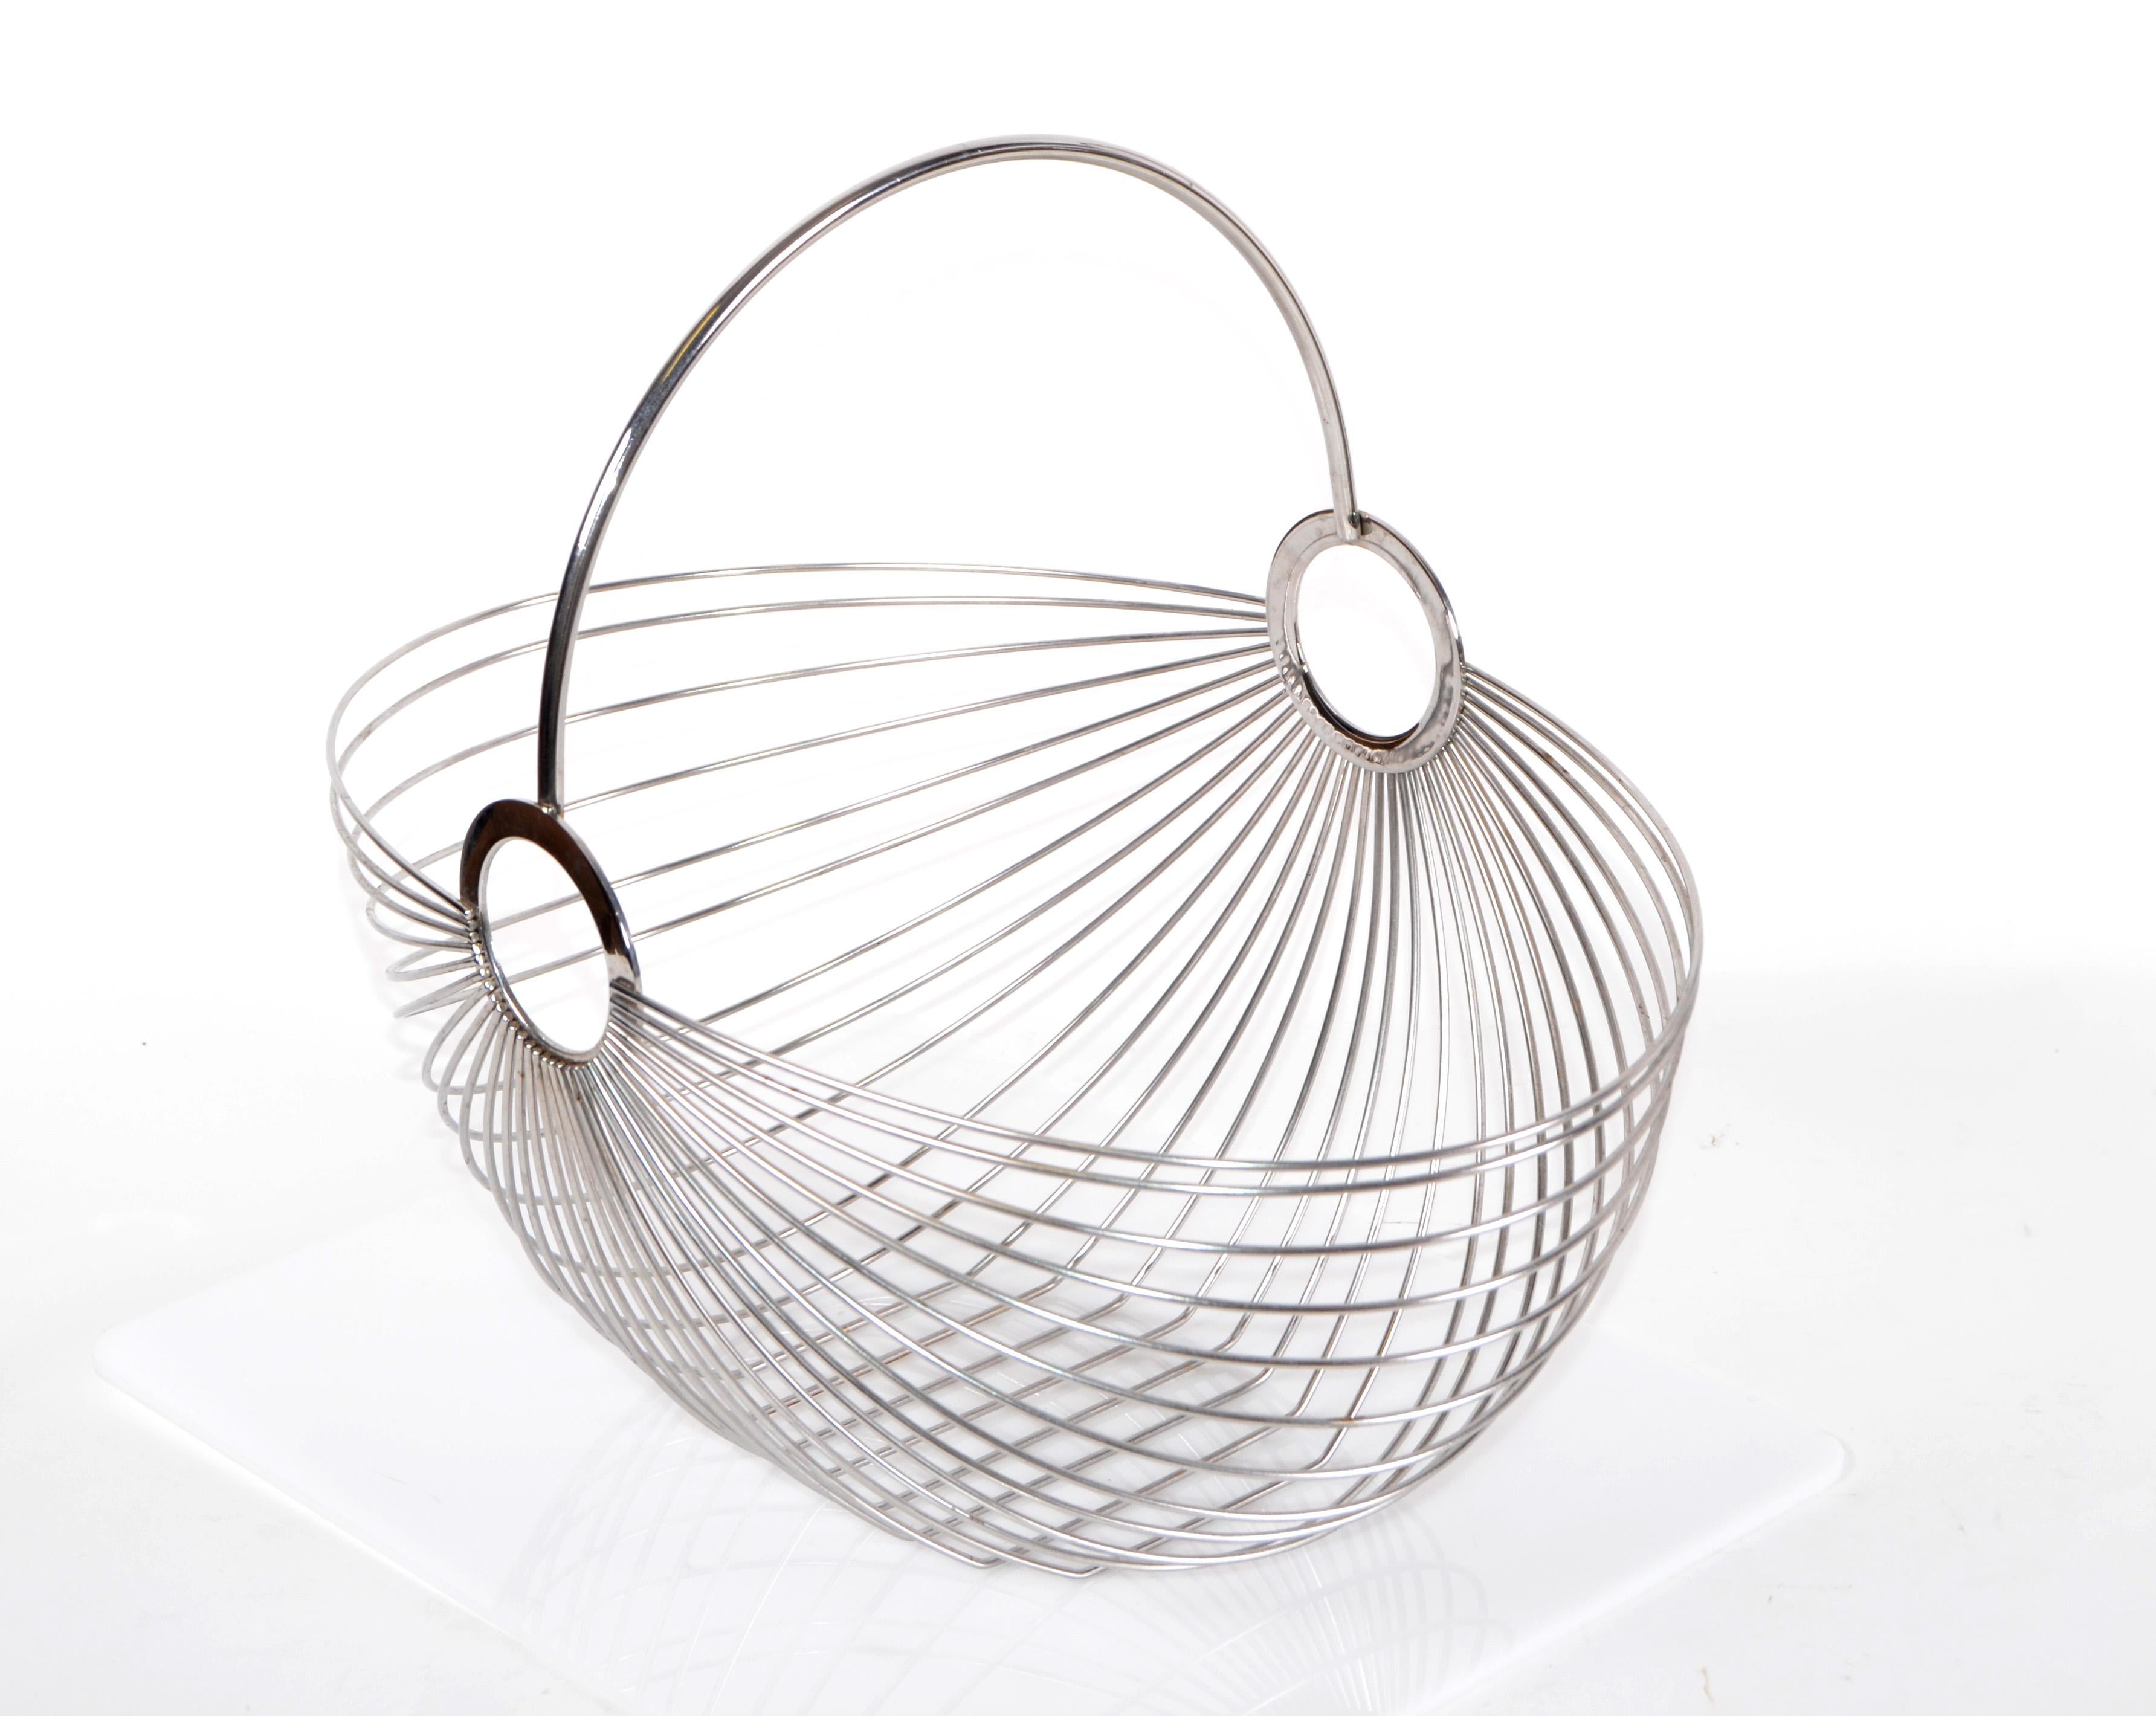 Ole Palsby Scandinavian Modern Decorative Stainless-Steel Basket Copenhagen For Sale 2